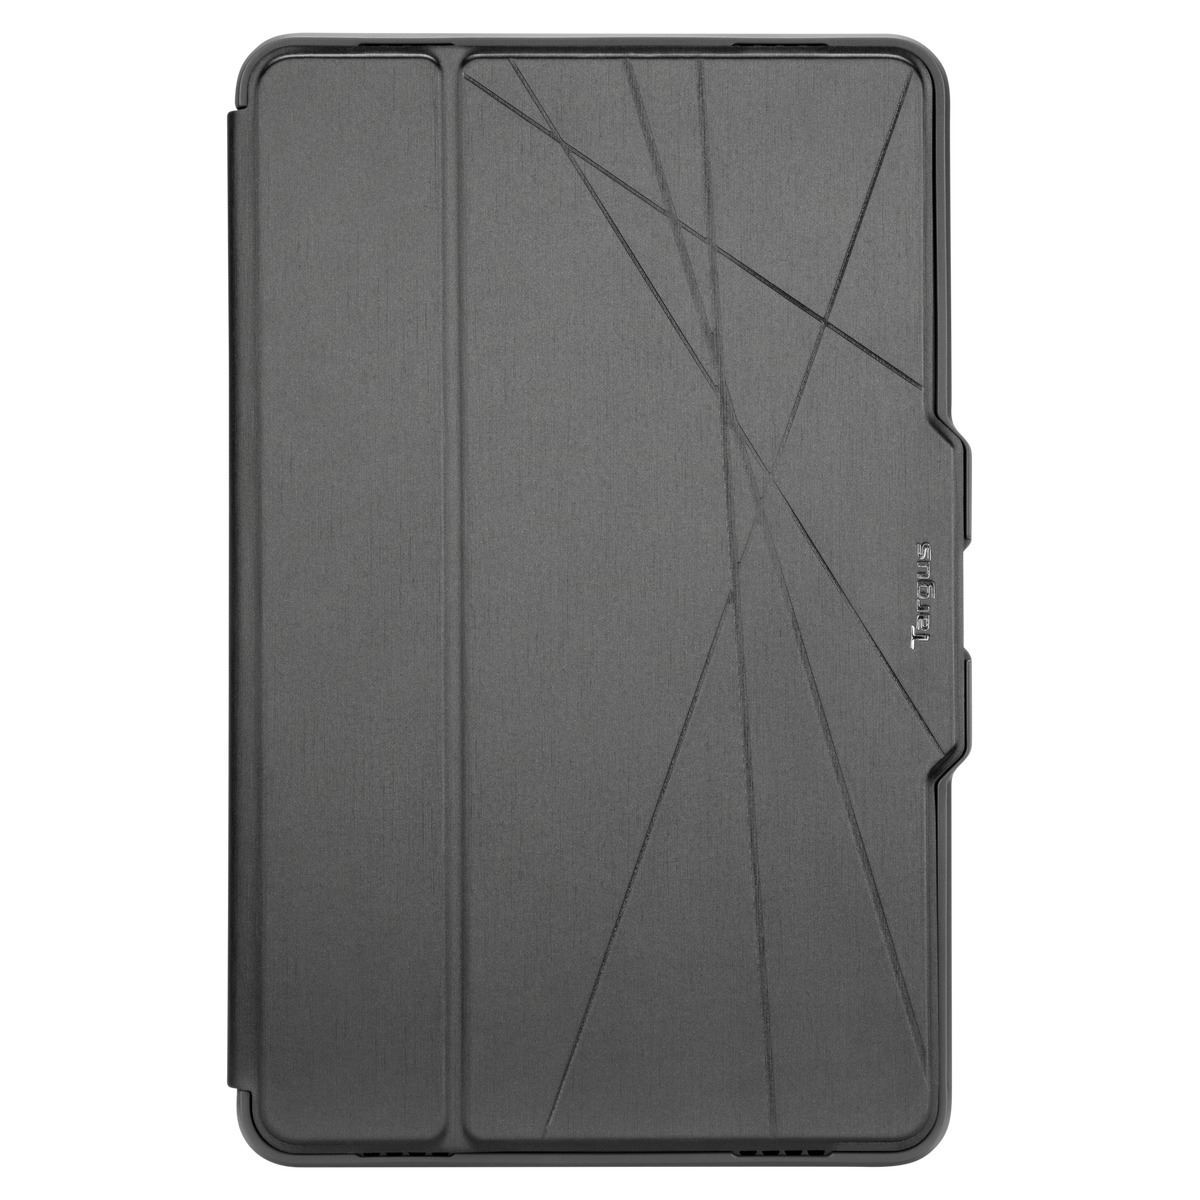 Click-In case for Samsung Galaxy Tab A 10.5" - Black